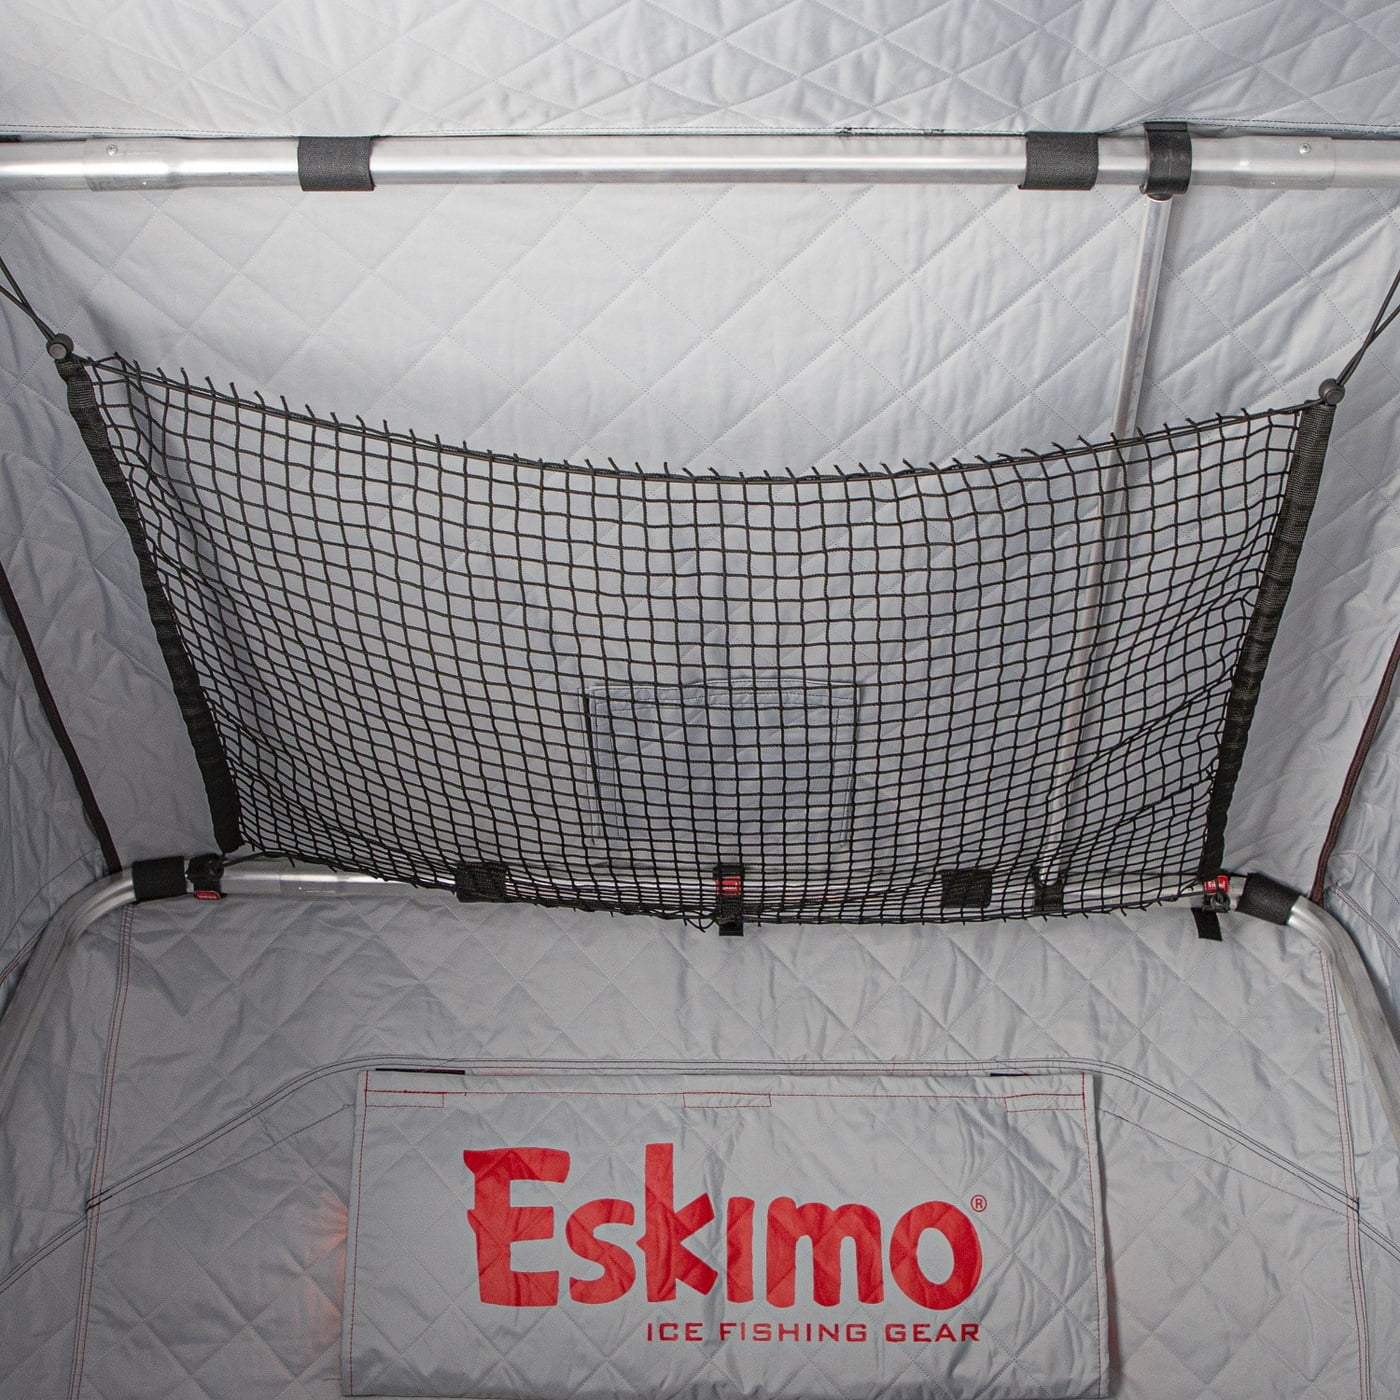 Eskimo 43459 Gear Net Organizer, Shelters, Organizers, Black